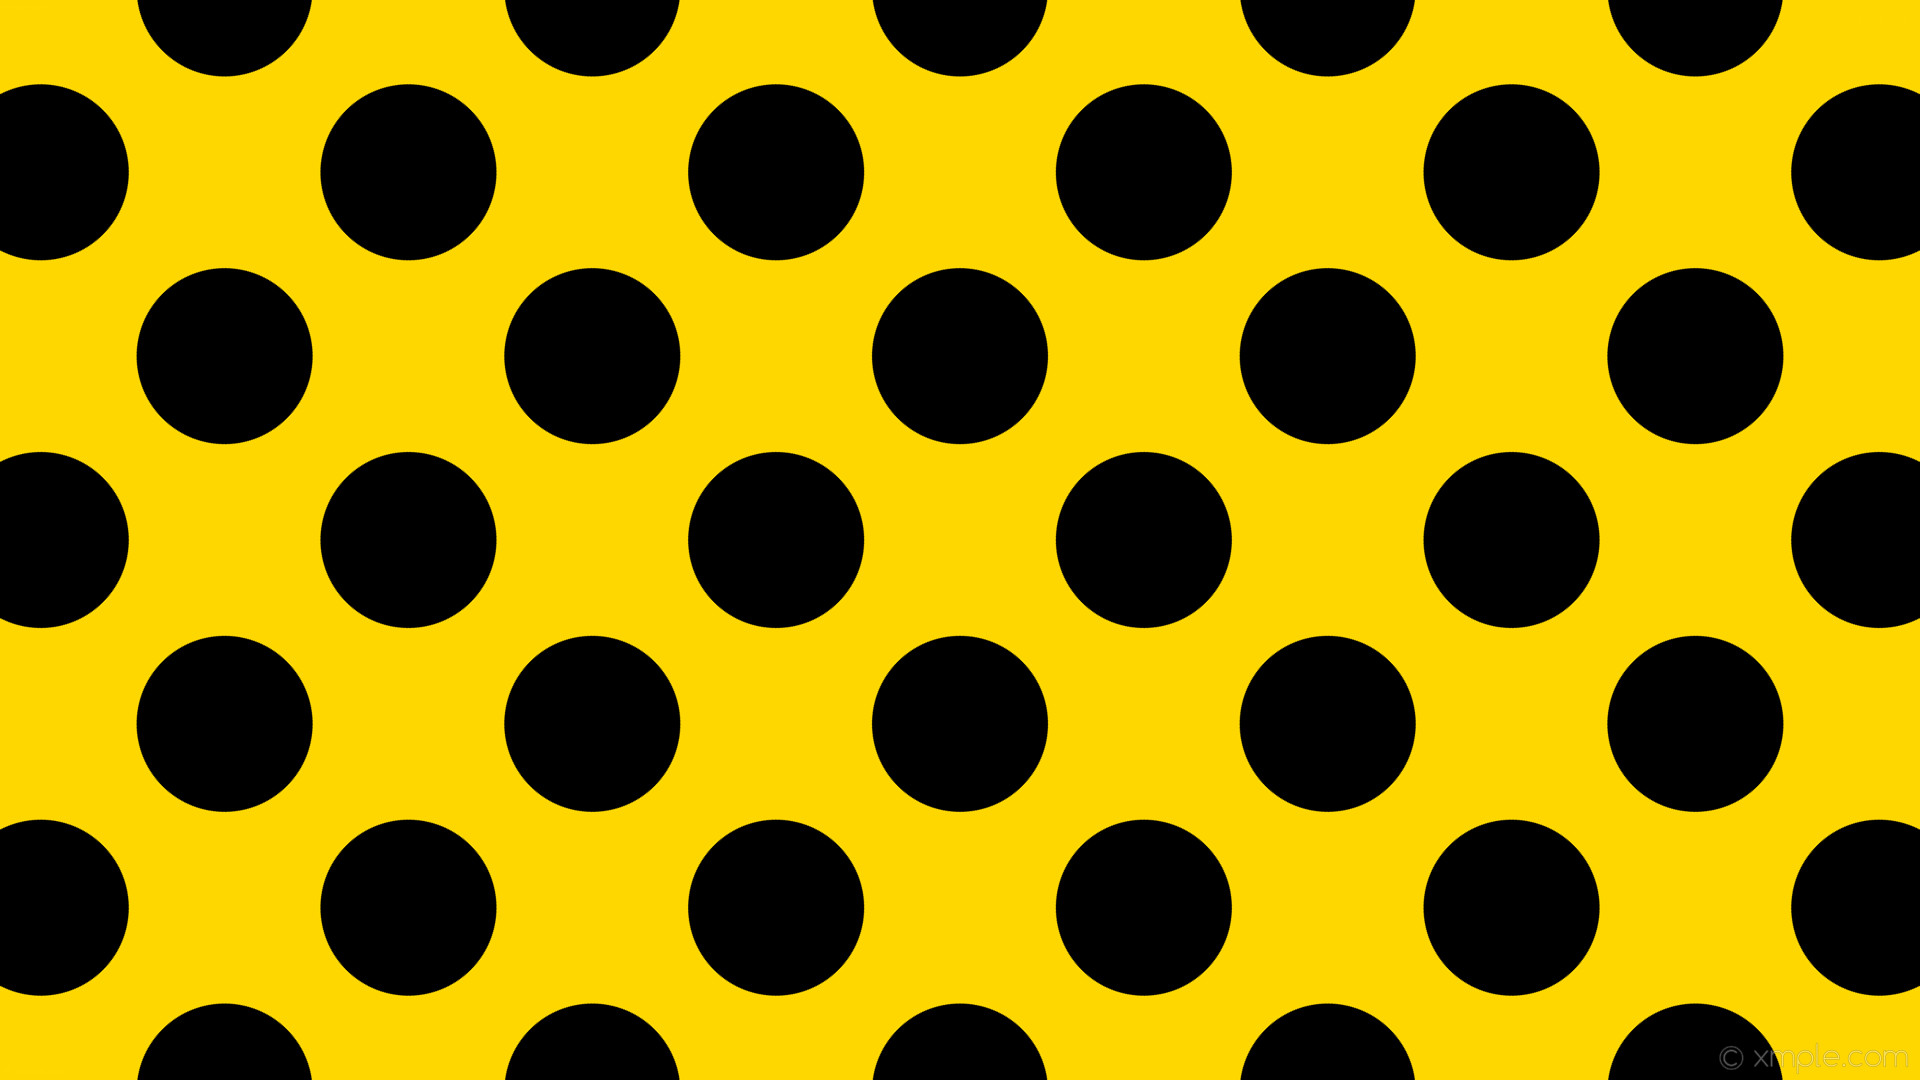 Spotty Polka Dot wallpaper in grey  yellow  I Love Wallpaper